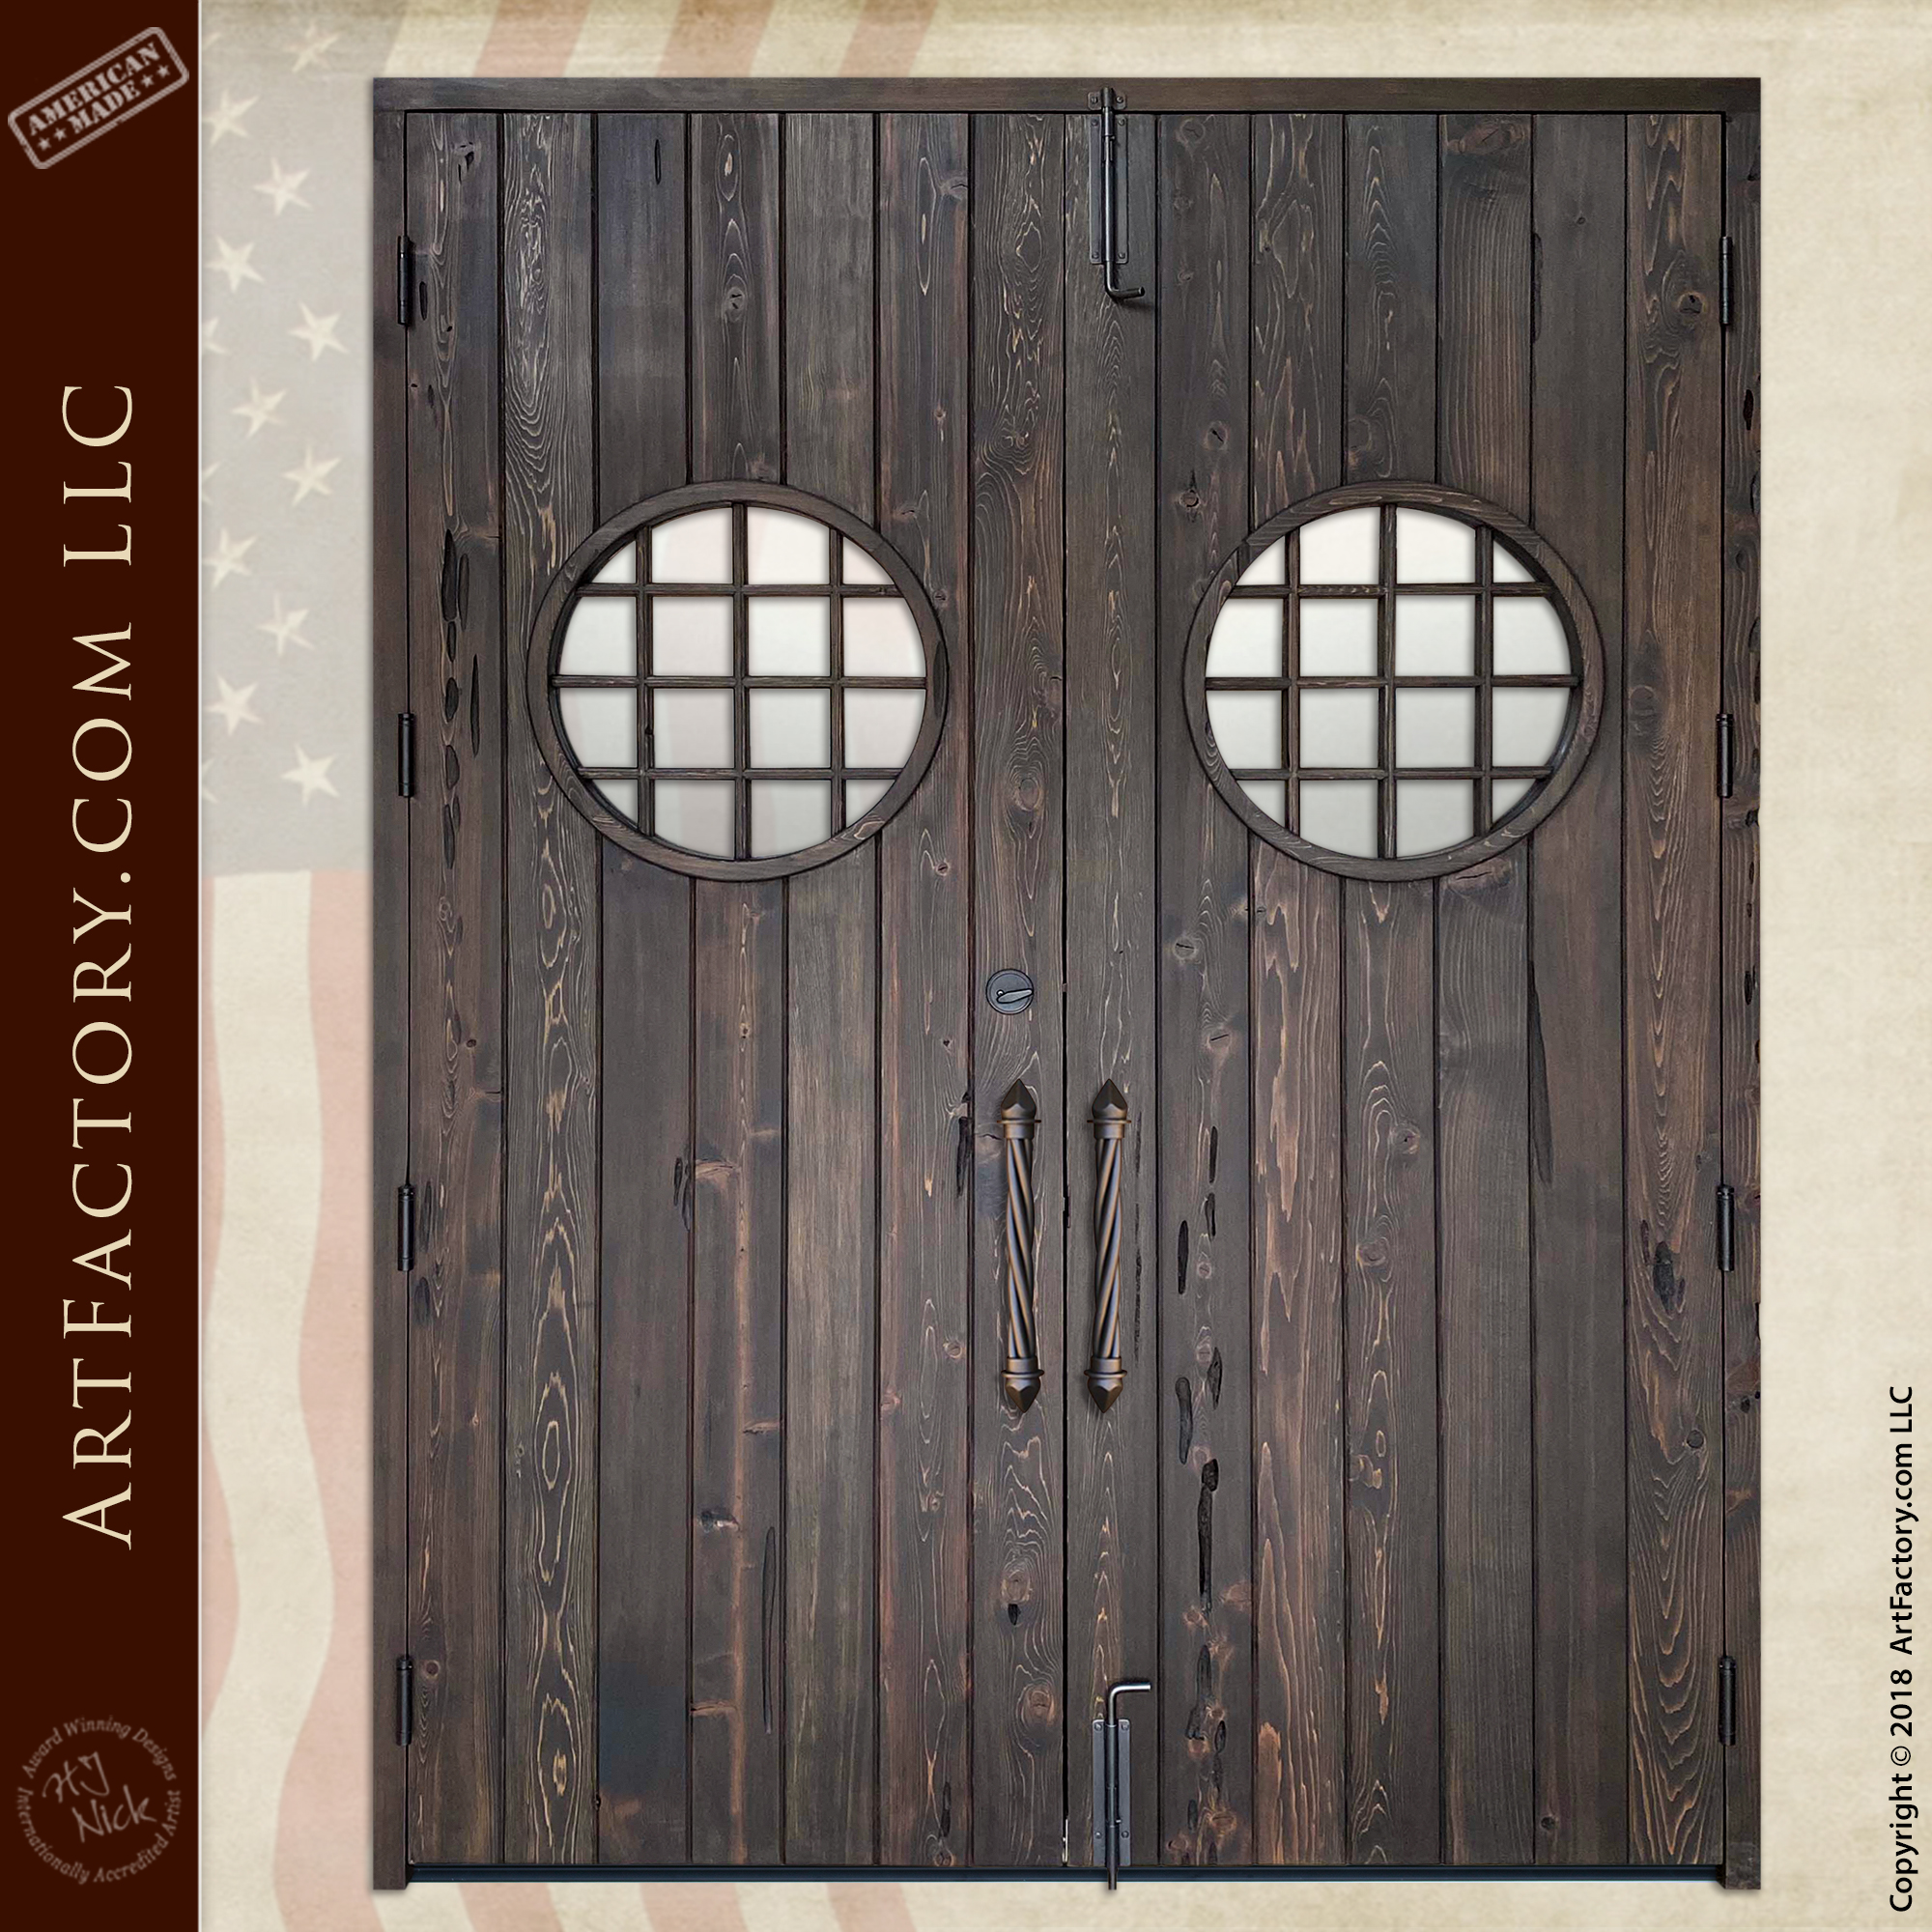 Solid Wood Vertical-Planked Doors with Custom Windows